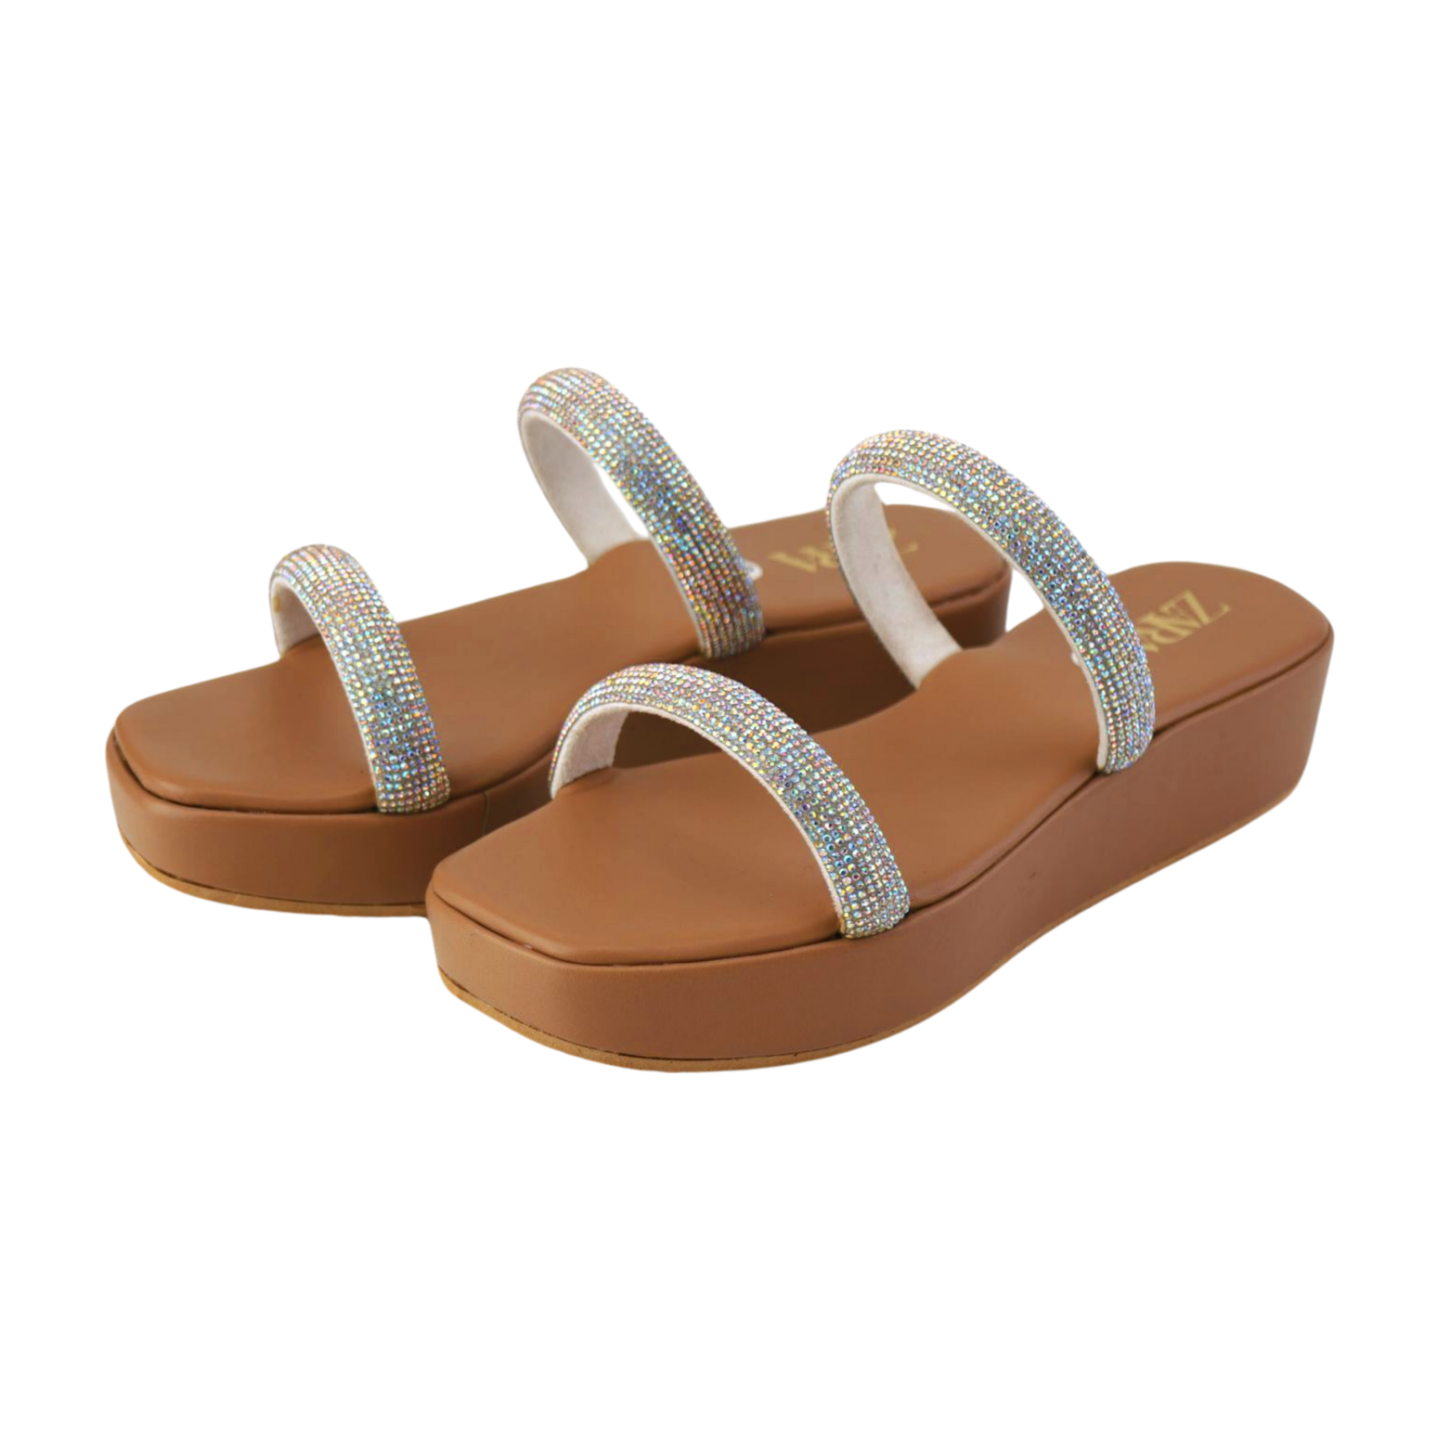 Comfortable and Stylish Rhinestone Mesh Wedge Heel Sandals For Women